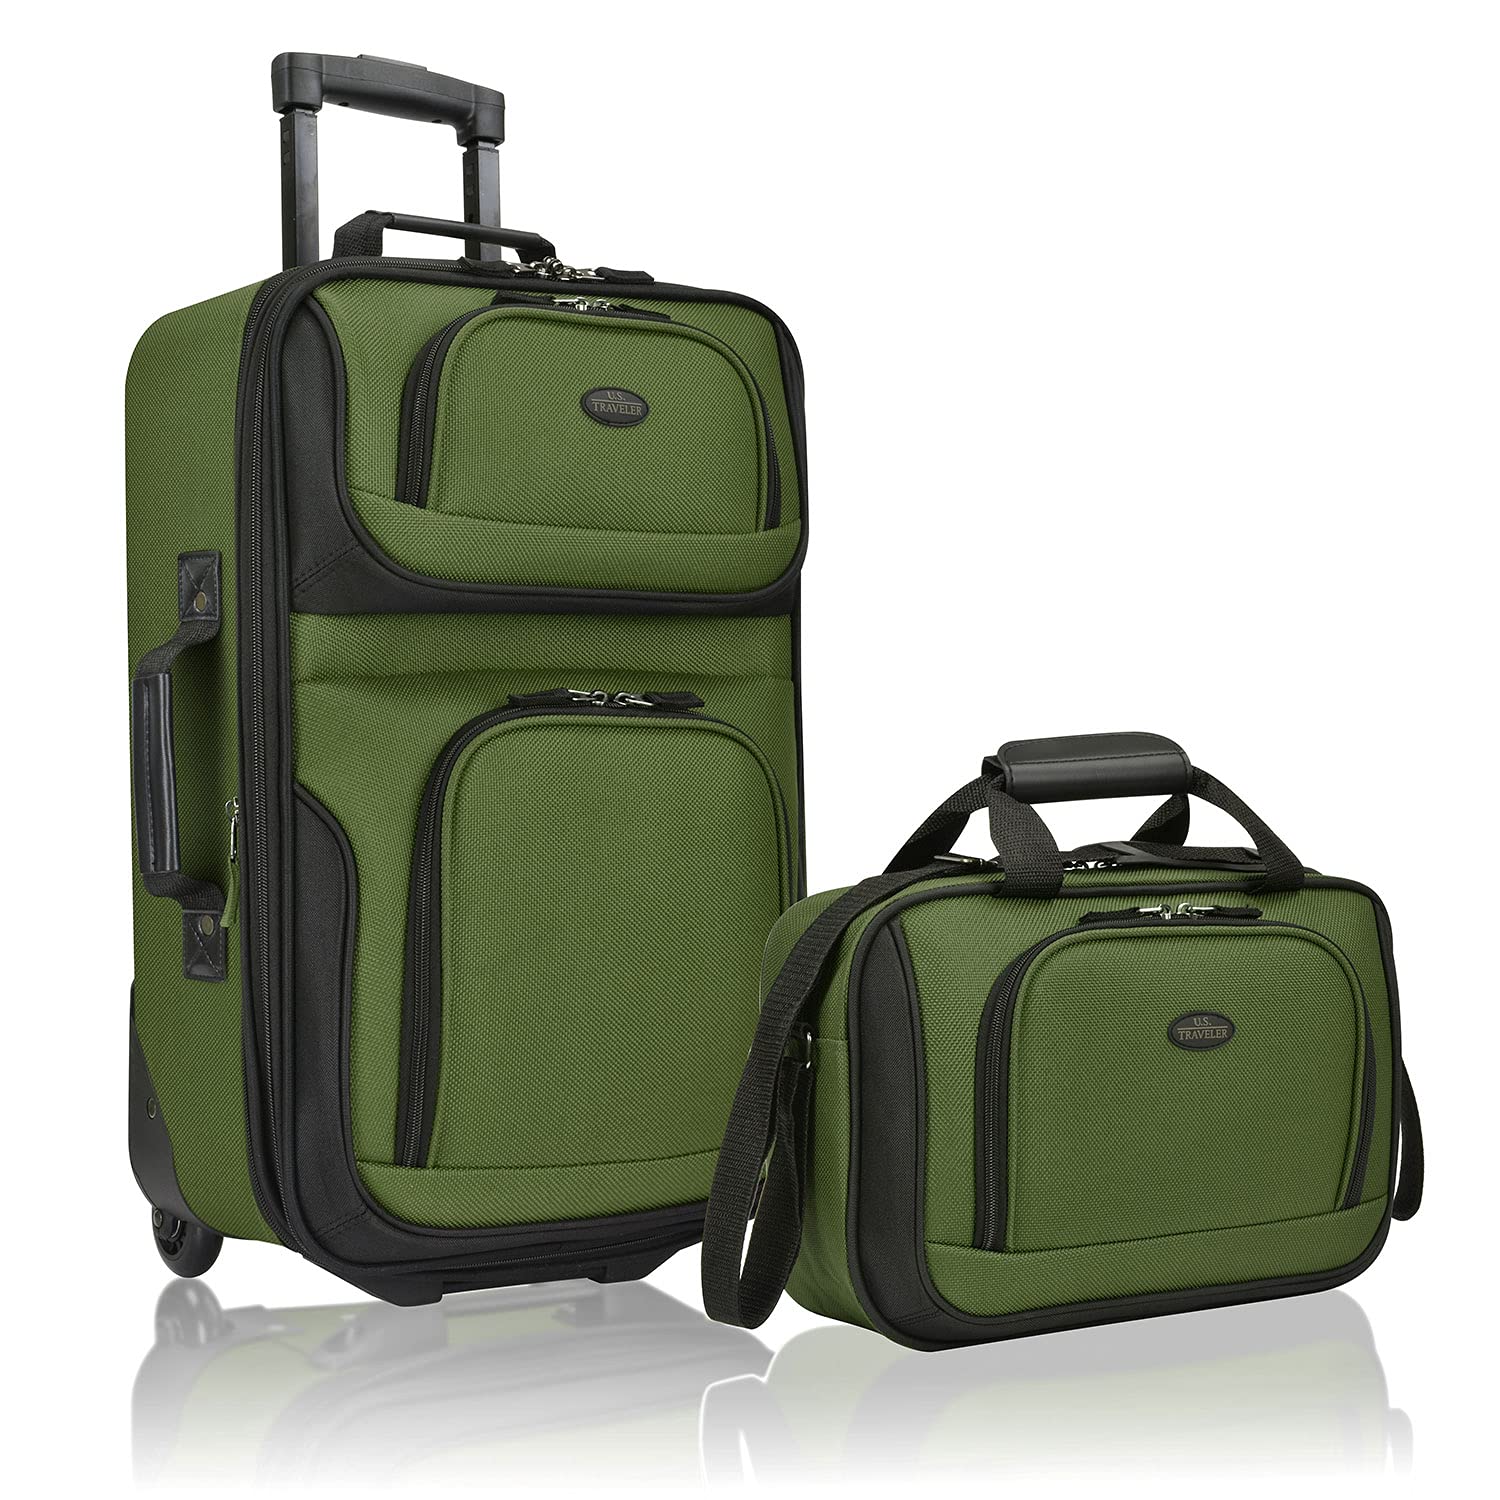 U.S. Traveler US Traveler Rio Fabric Expandable carry-on Luggage, green, 2 Wheel